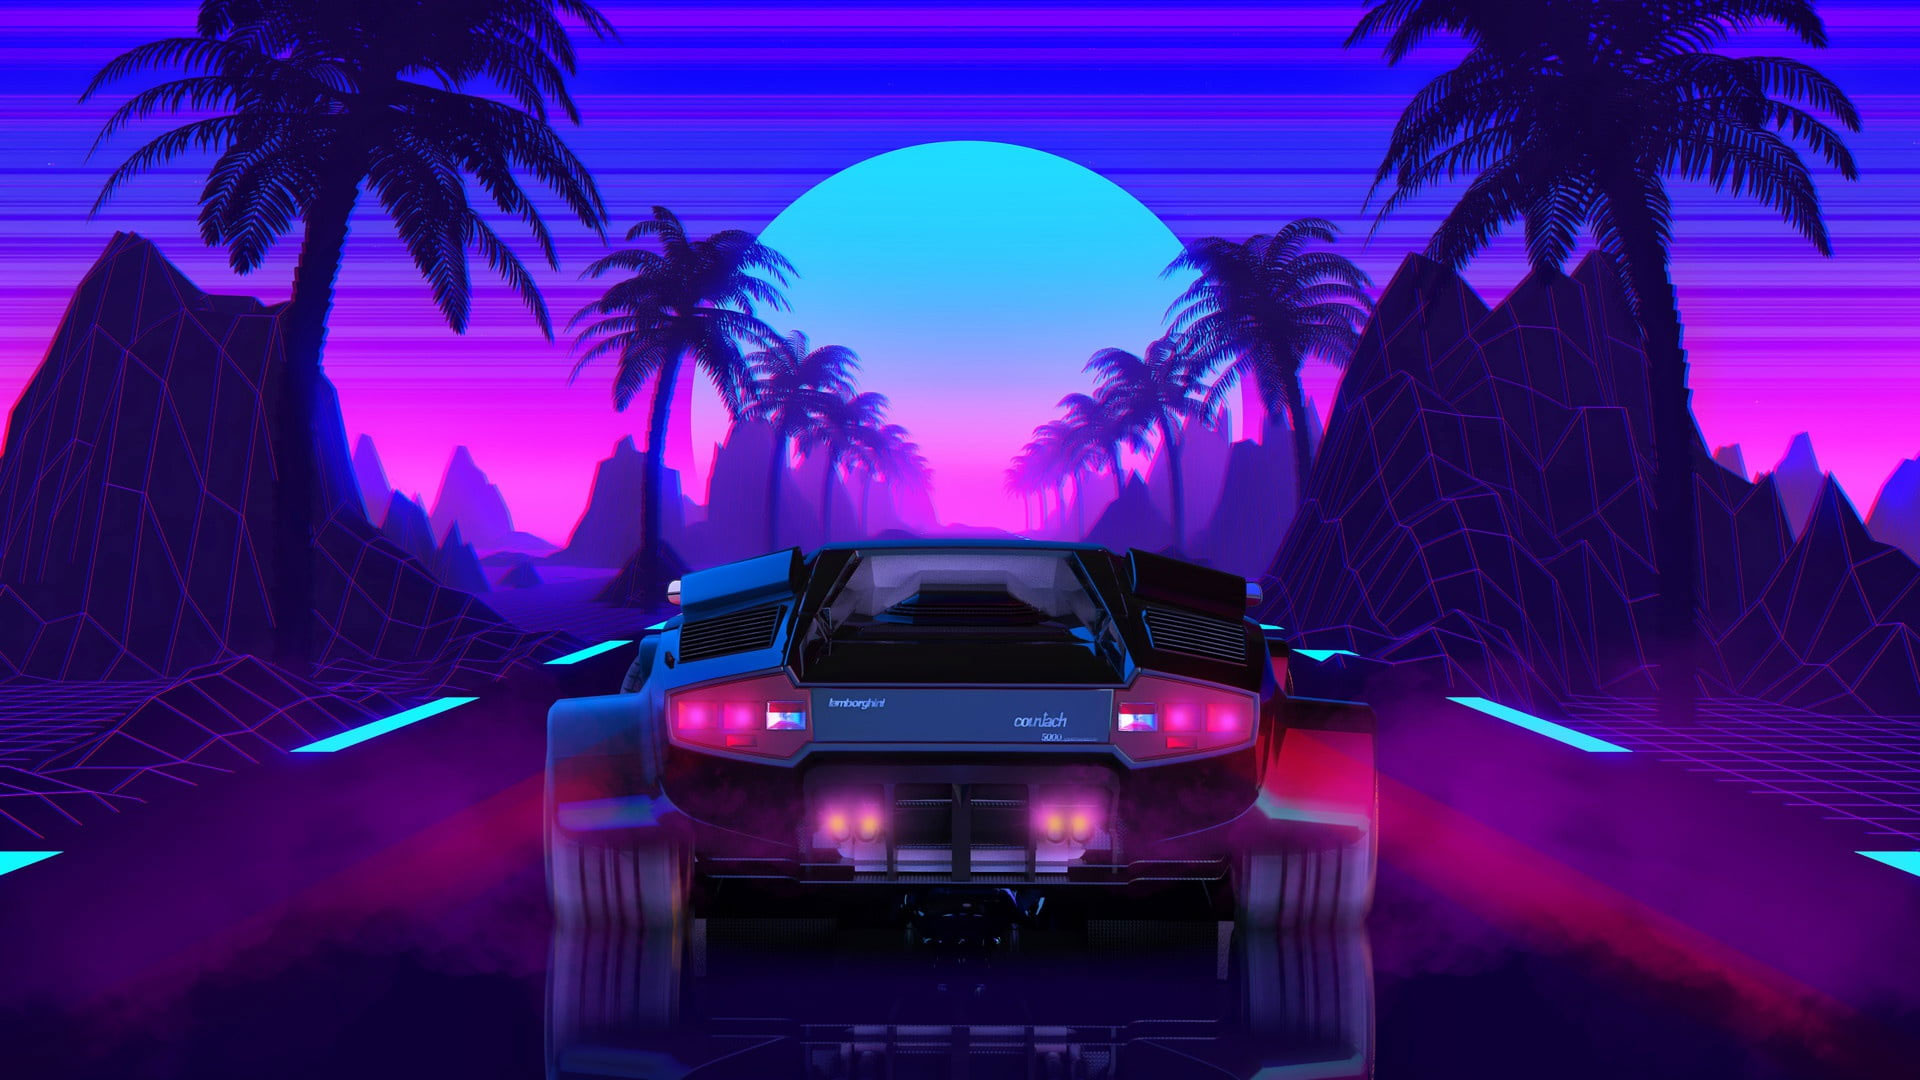 Black car neon wallpaper, Lamborghini, vehicle, artwork, rear view